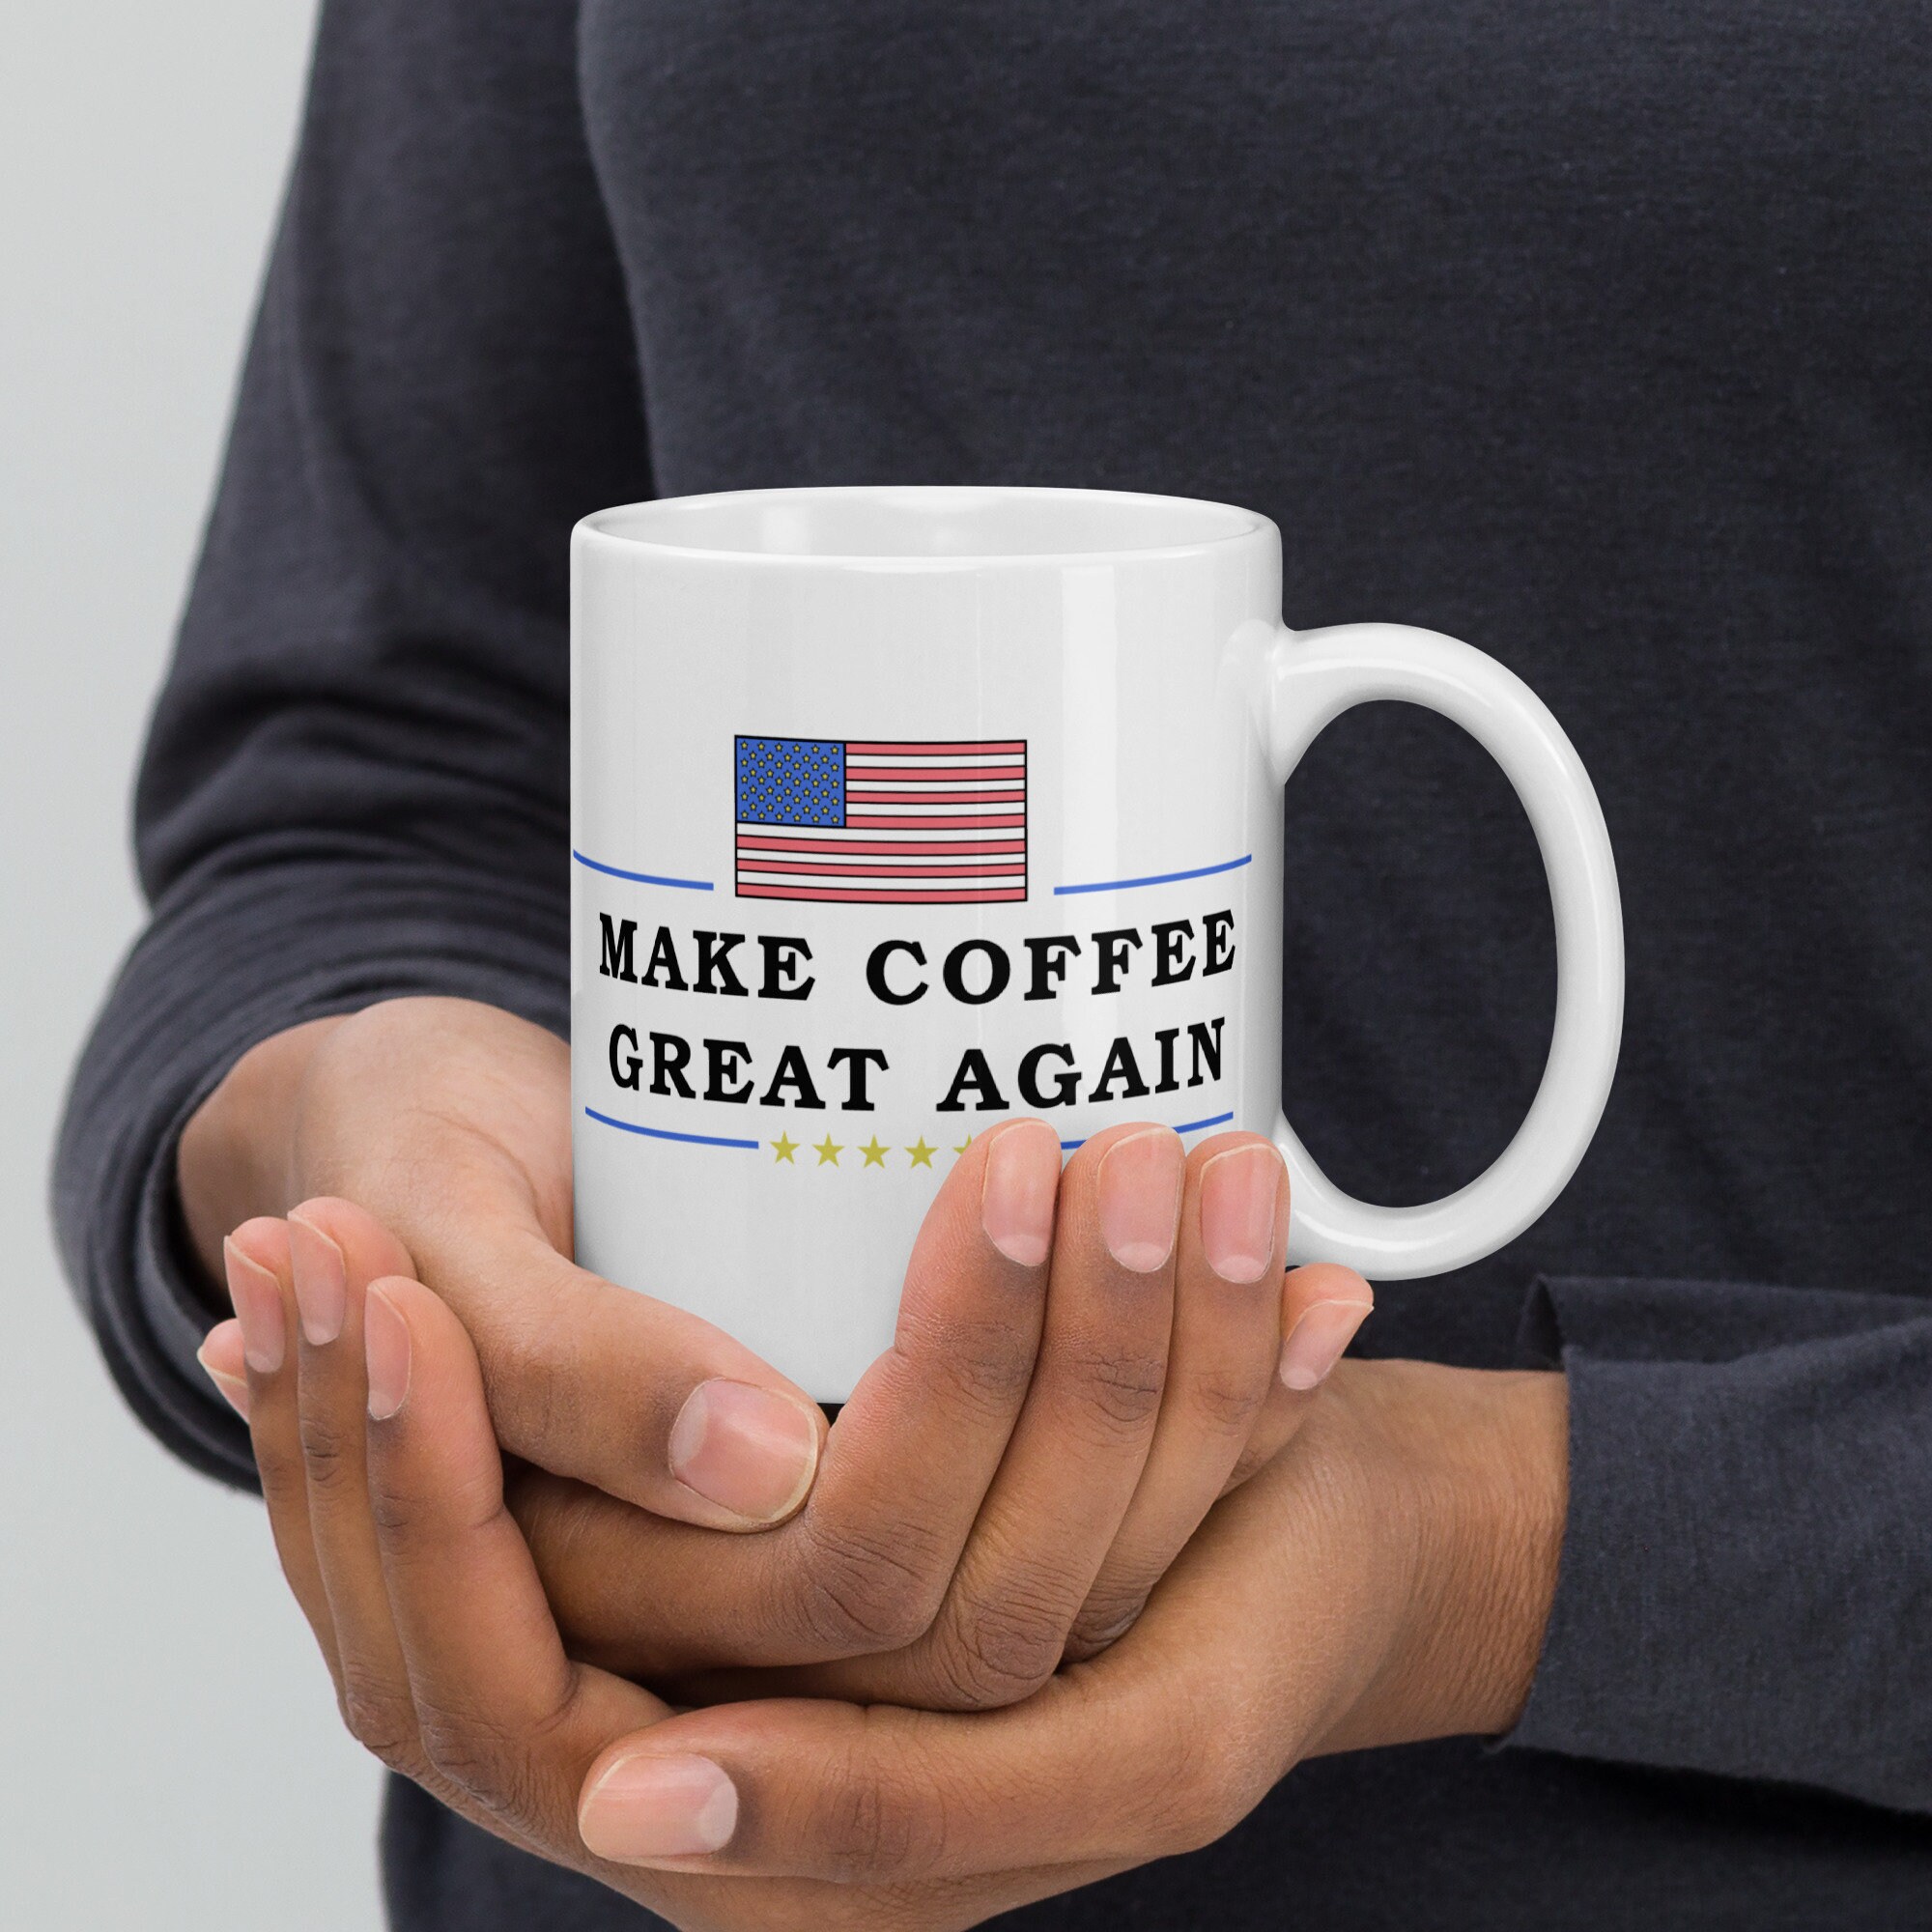 Discover Make Coffee Great Again - MAGA Parody Mug - Funny Trump Coffee Cup